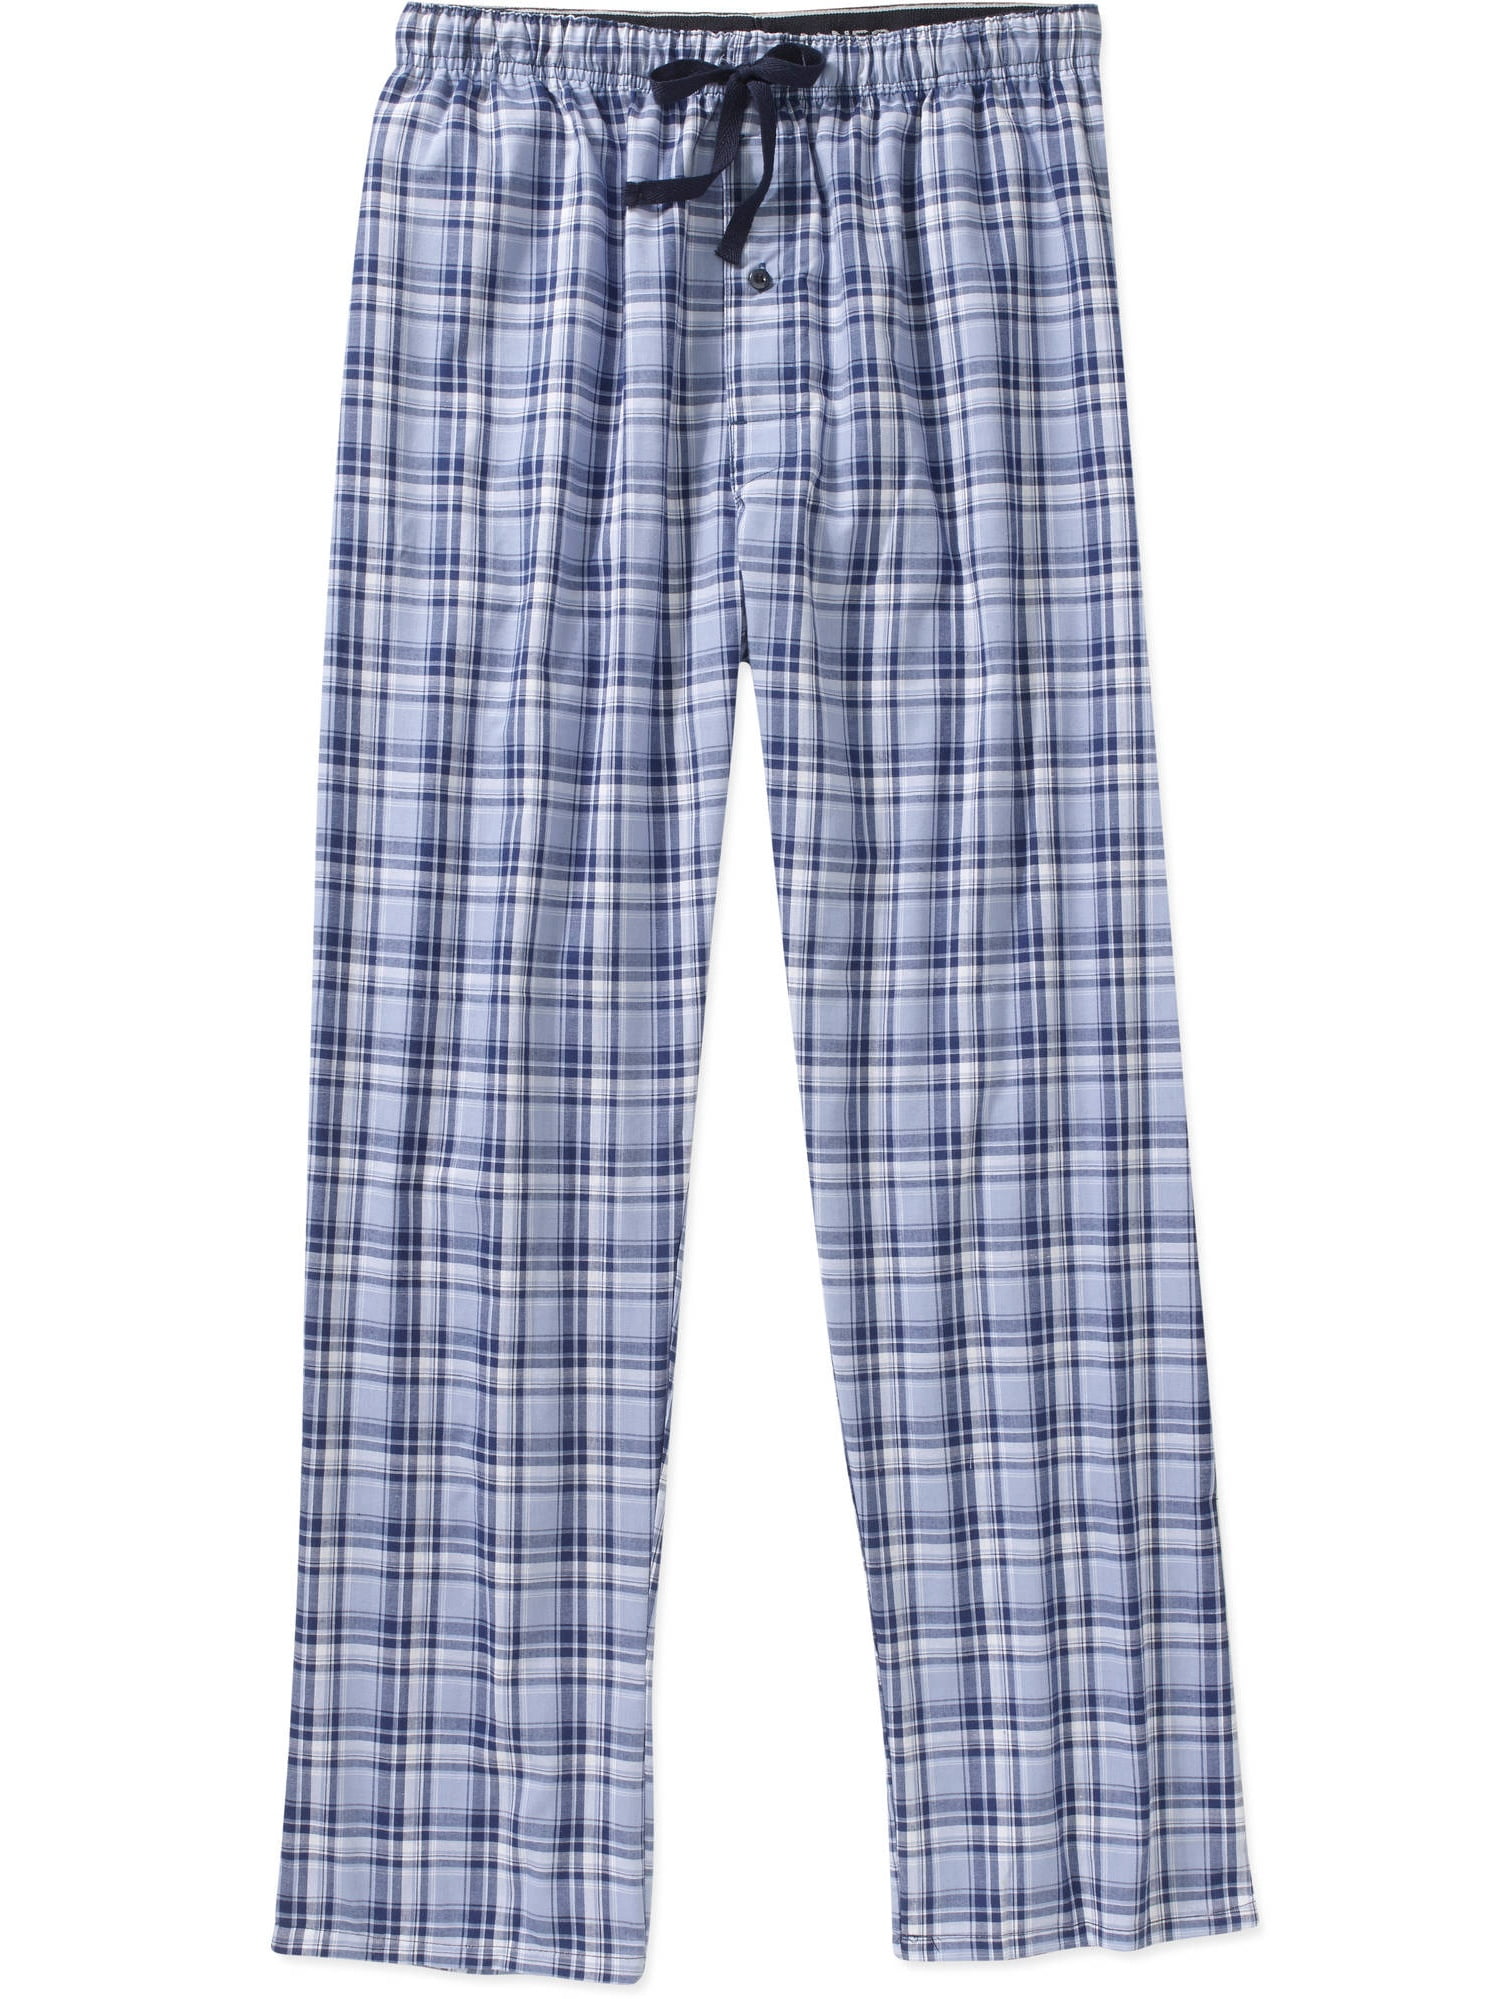 Hanes - Men's Woven Sleep Pant - Walmart.com - Walmart.com